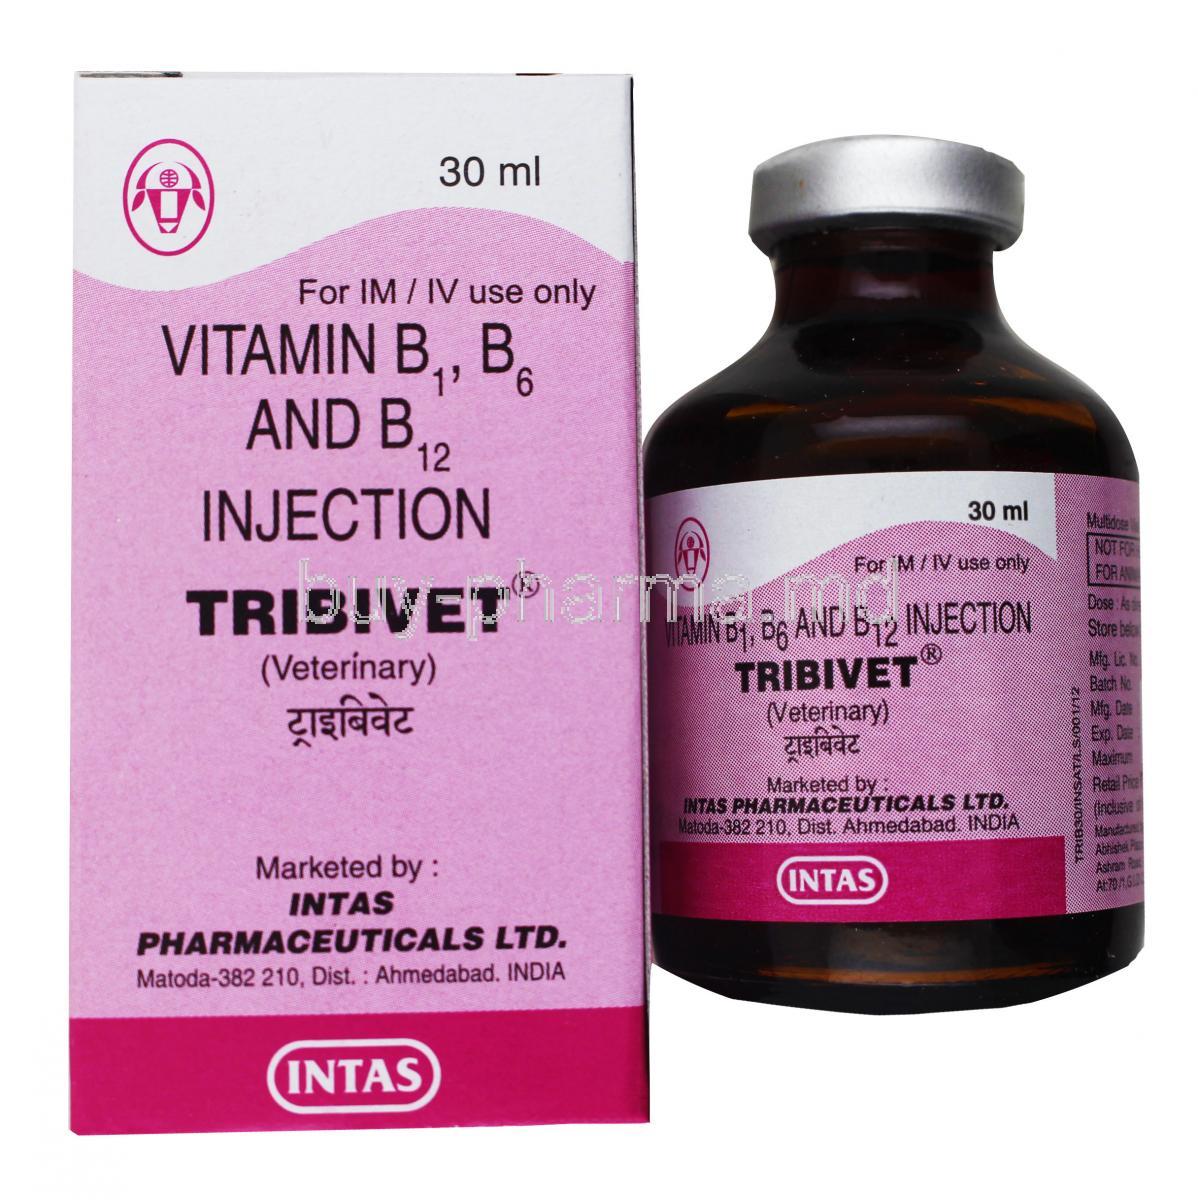 Tribivet box and vial